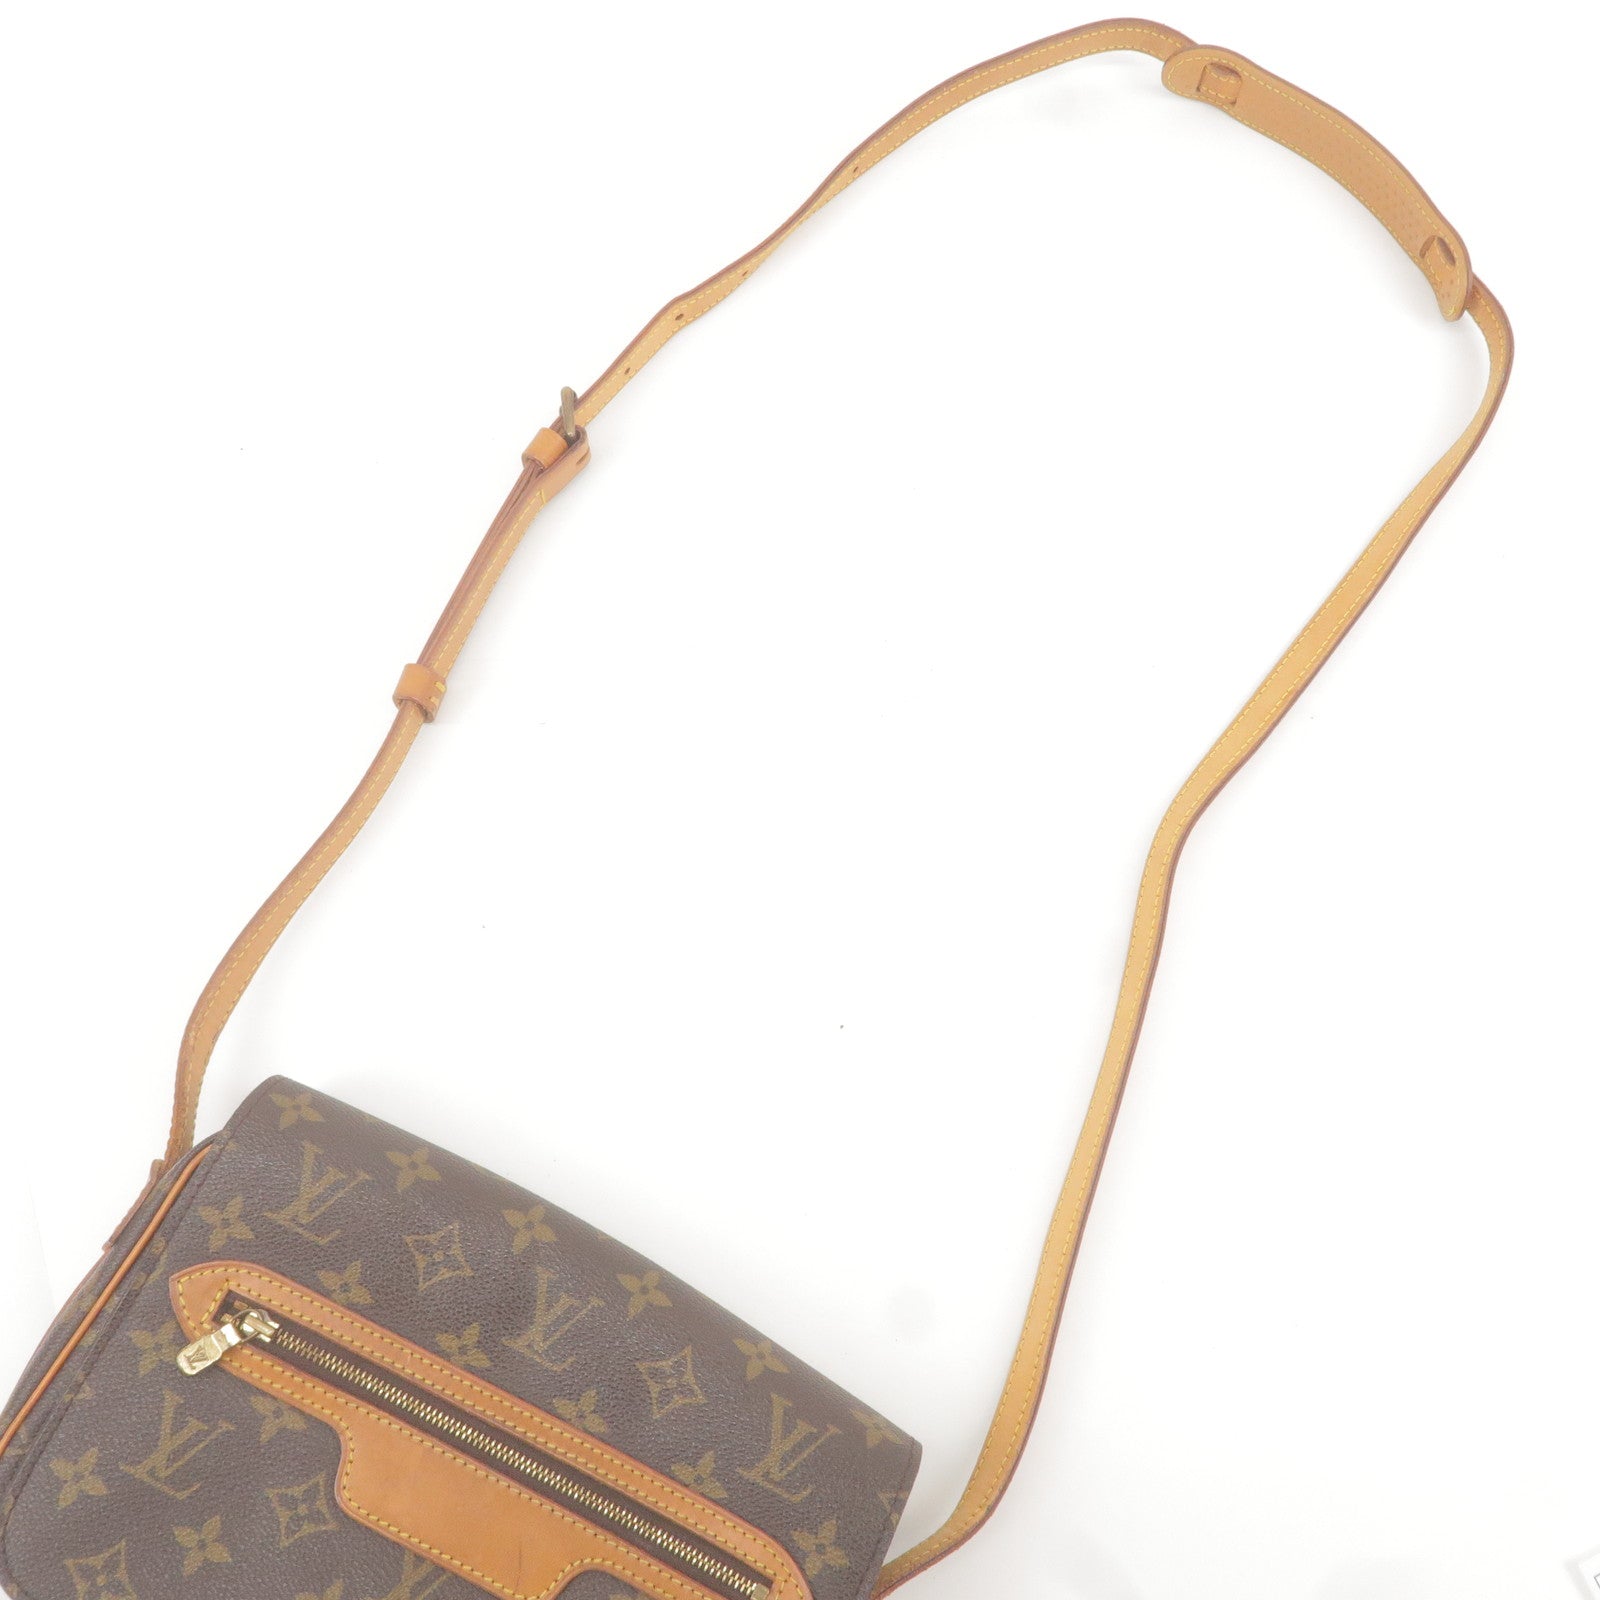 Louis-Vuitton-Monogram-Saint-Germain-24-Shoulder-Bag-M51210